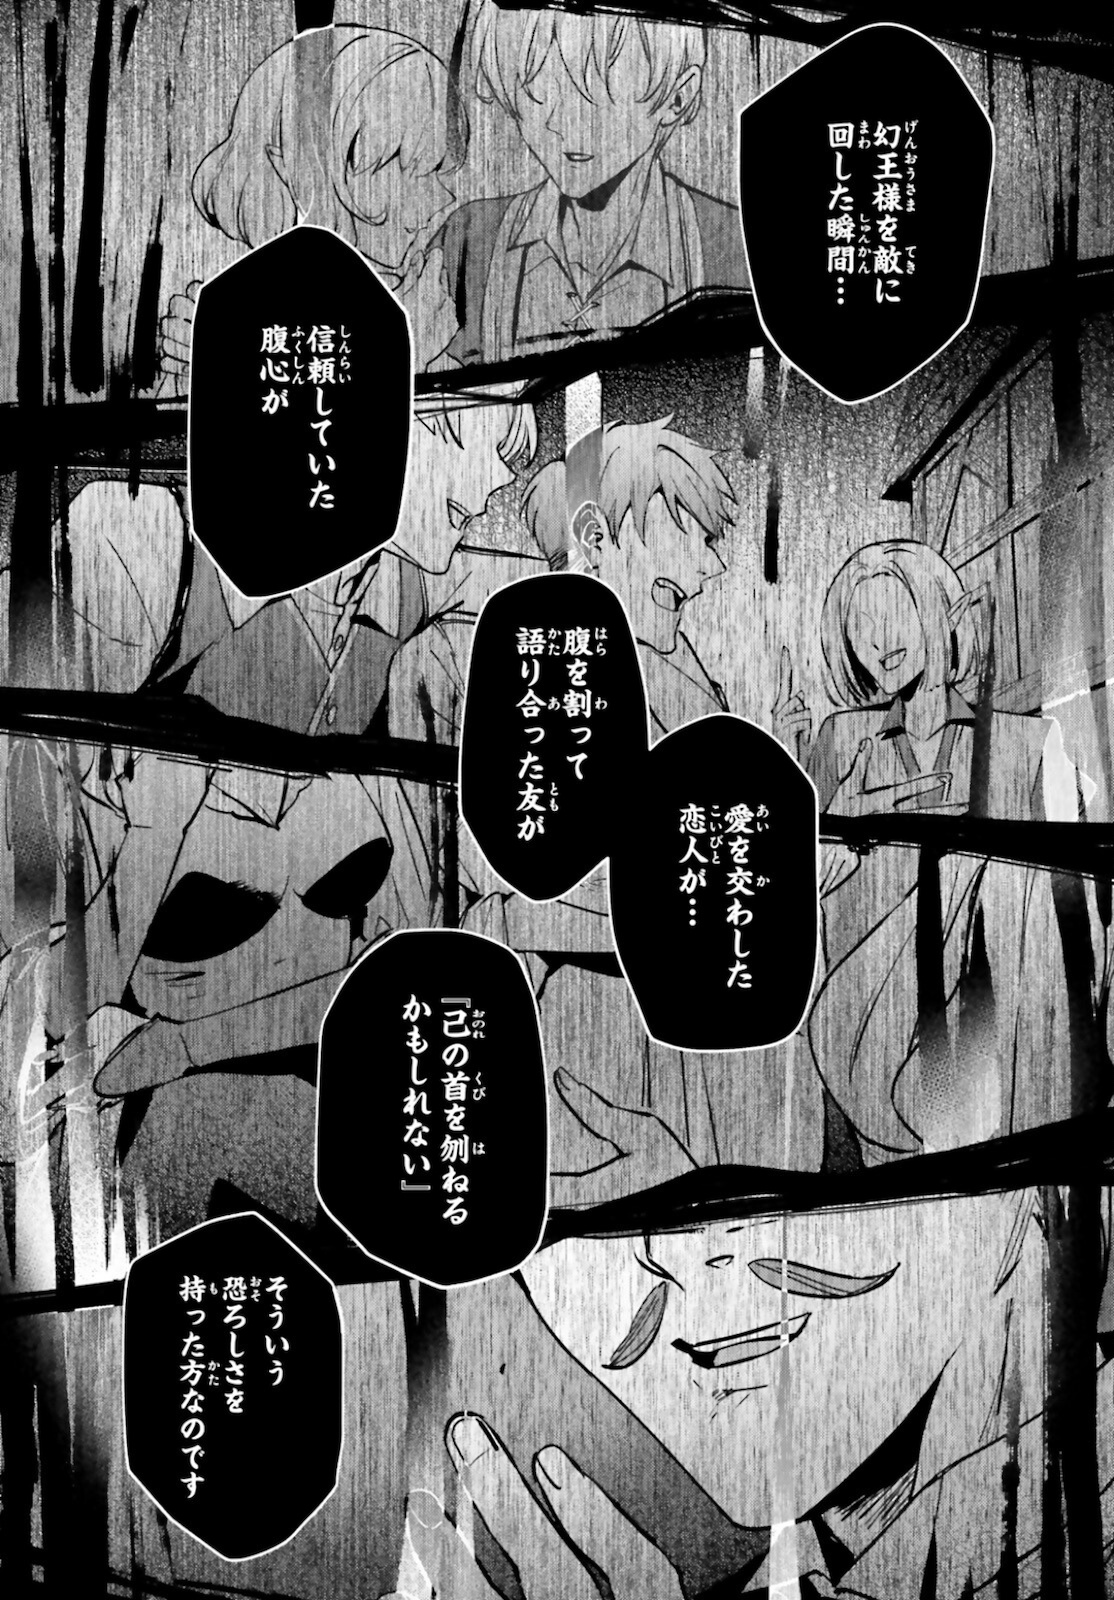 Yuusha Shoukan ni Makikomareta kedo Isekai wa Heiwa deshita (I Was Caught  Up In A Hero Summoning But That World Is At Peace) Image by Ochau #3062178  - Zerochan Anime Image Board